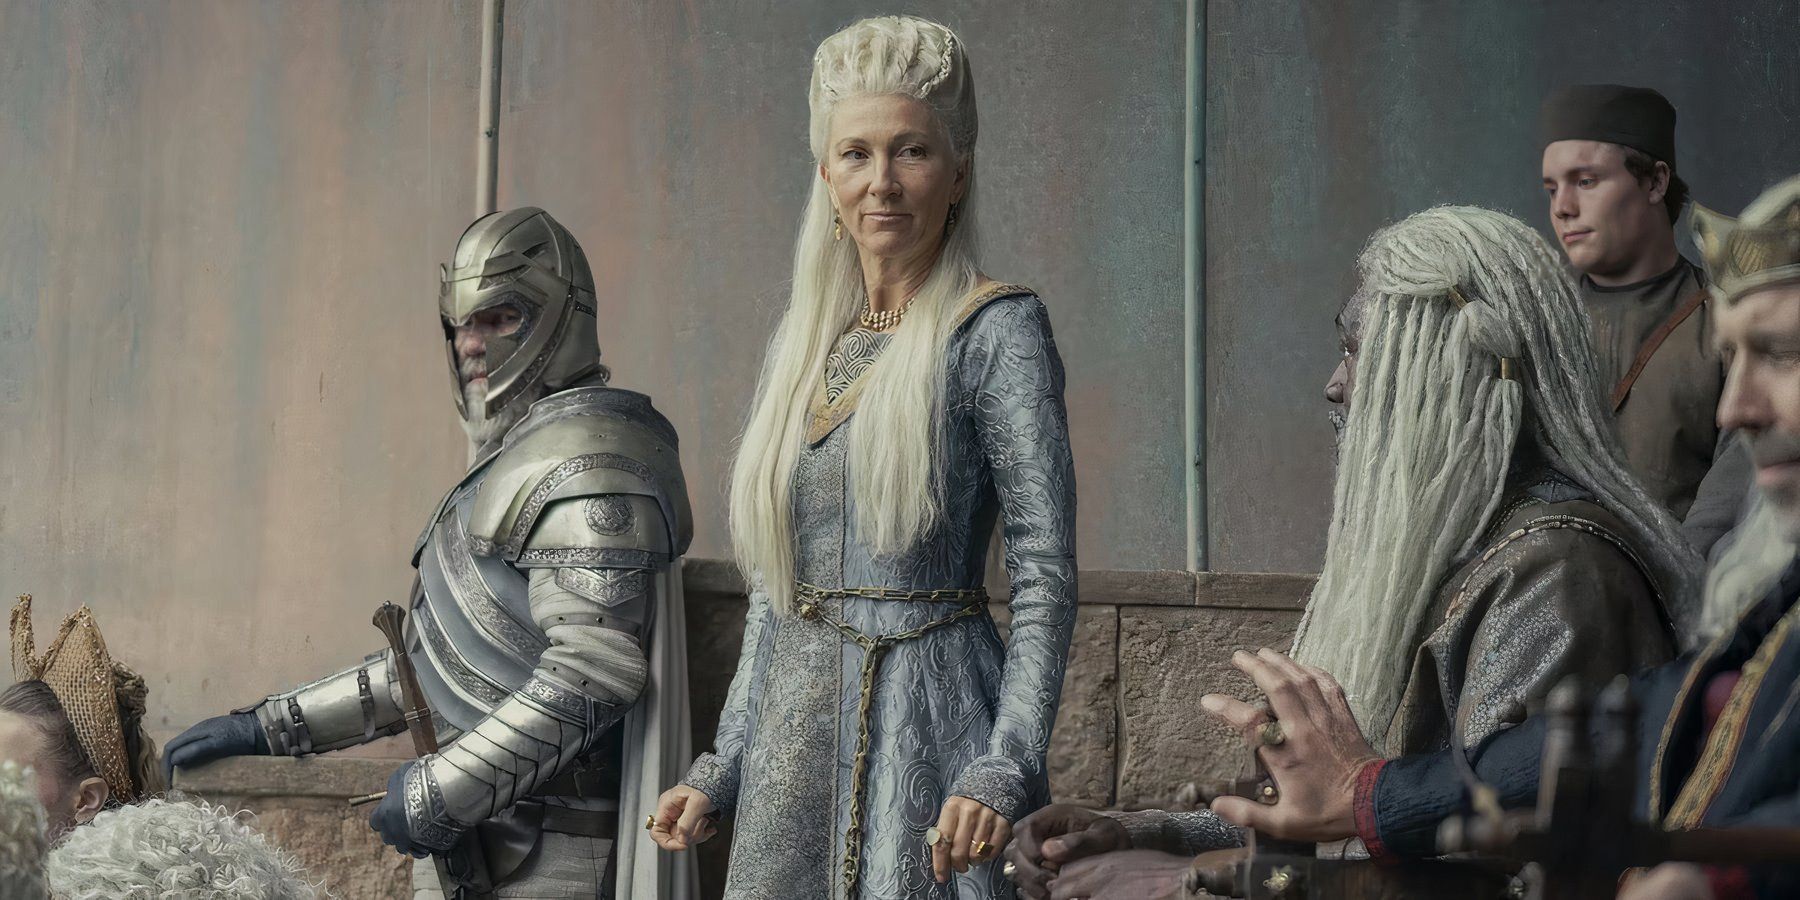 Princess Rhaenys Targaryen with her husband Corlys Velaryon in House of the Dragon